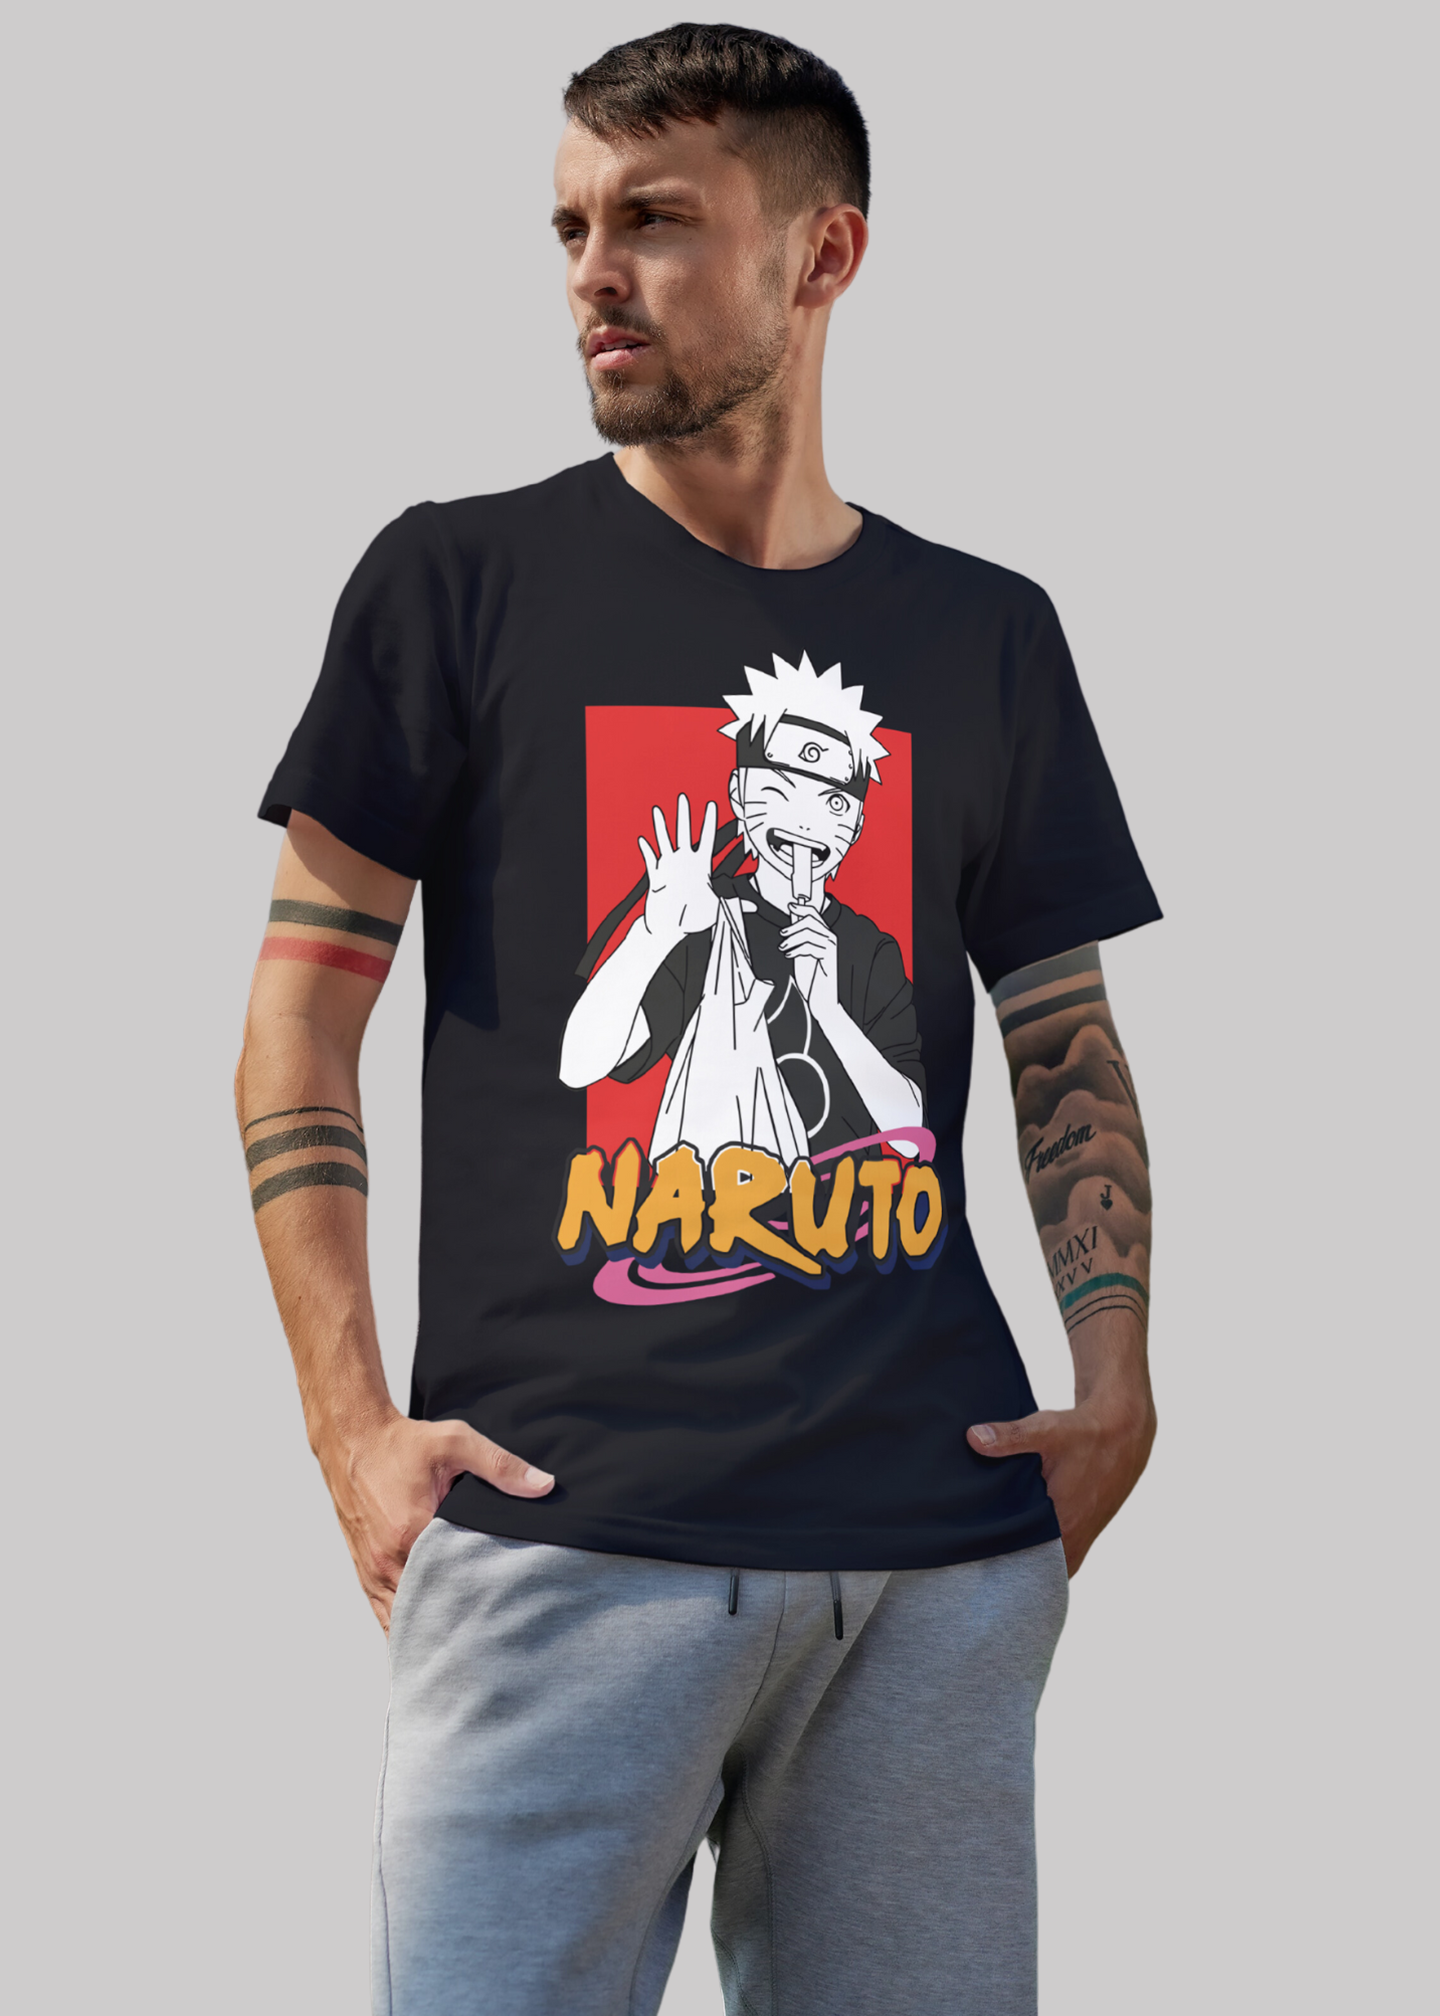 Naruto 1 Printed Half Sleeve Premium Cotton T-shirt For Men